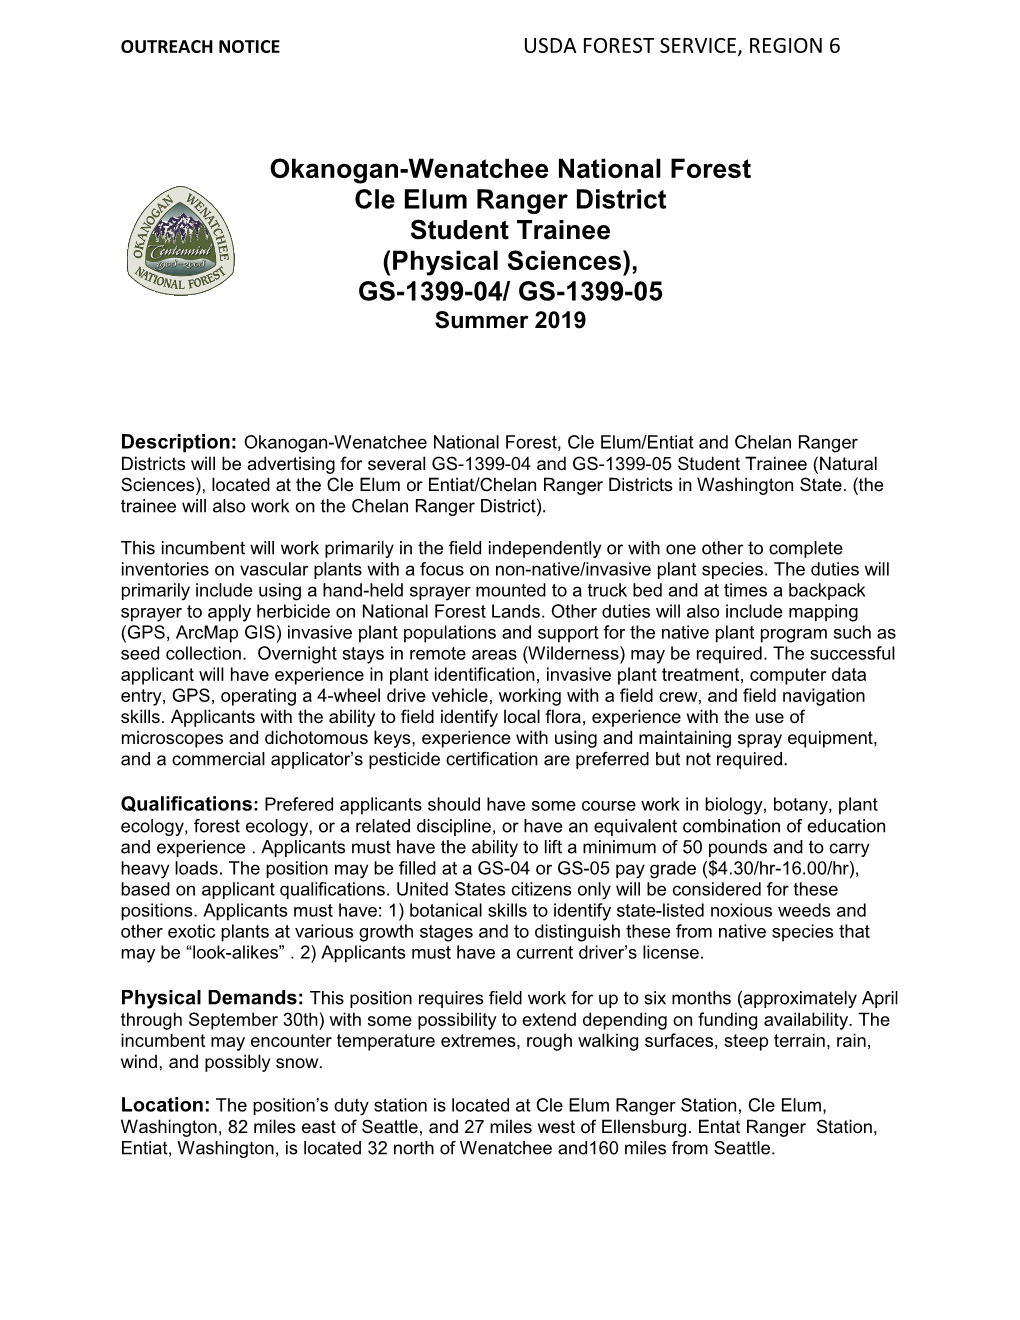 Okanogan-Wenatchee National Forest Cle Elum Ranger District Student Trainee (Physical Sciences), GS-1399-04/ GS-1399-05 Summer 2019